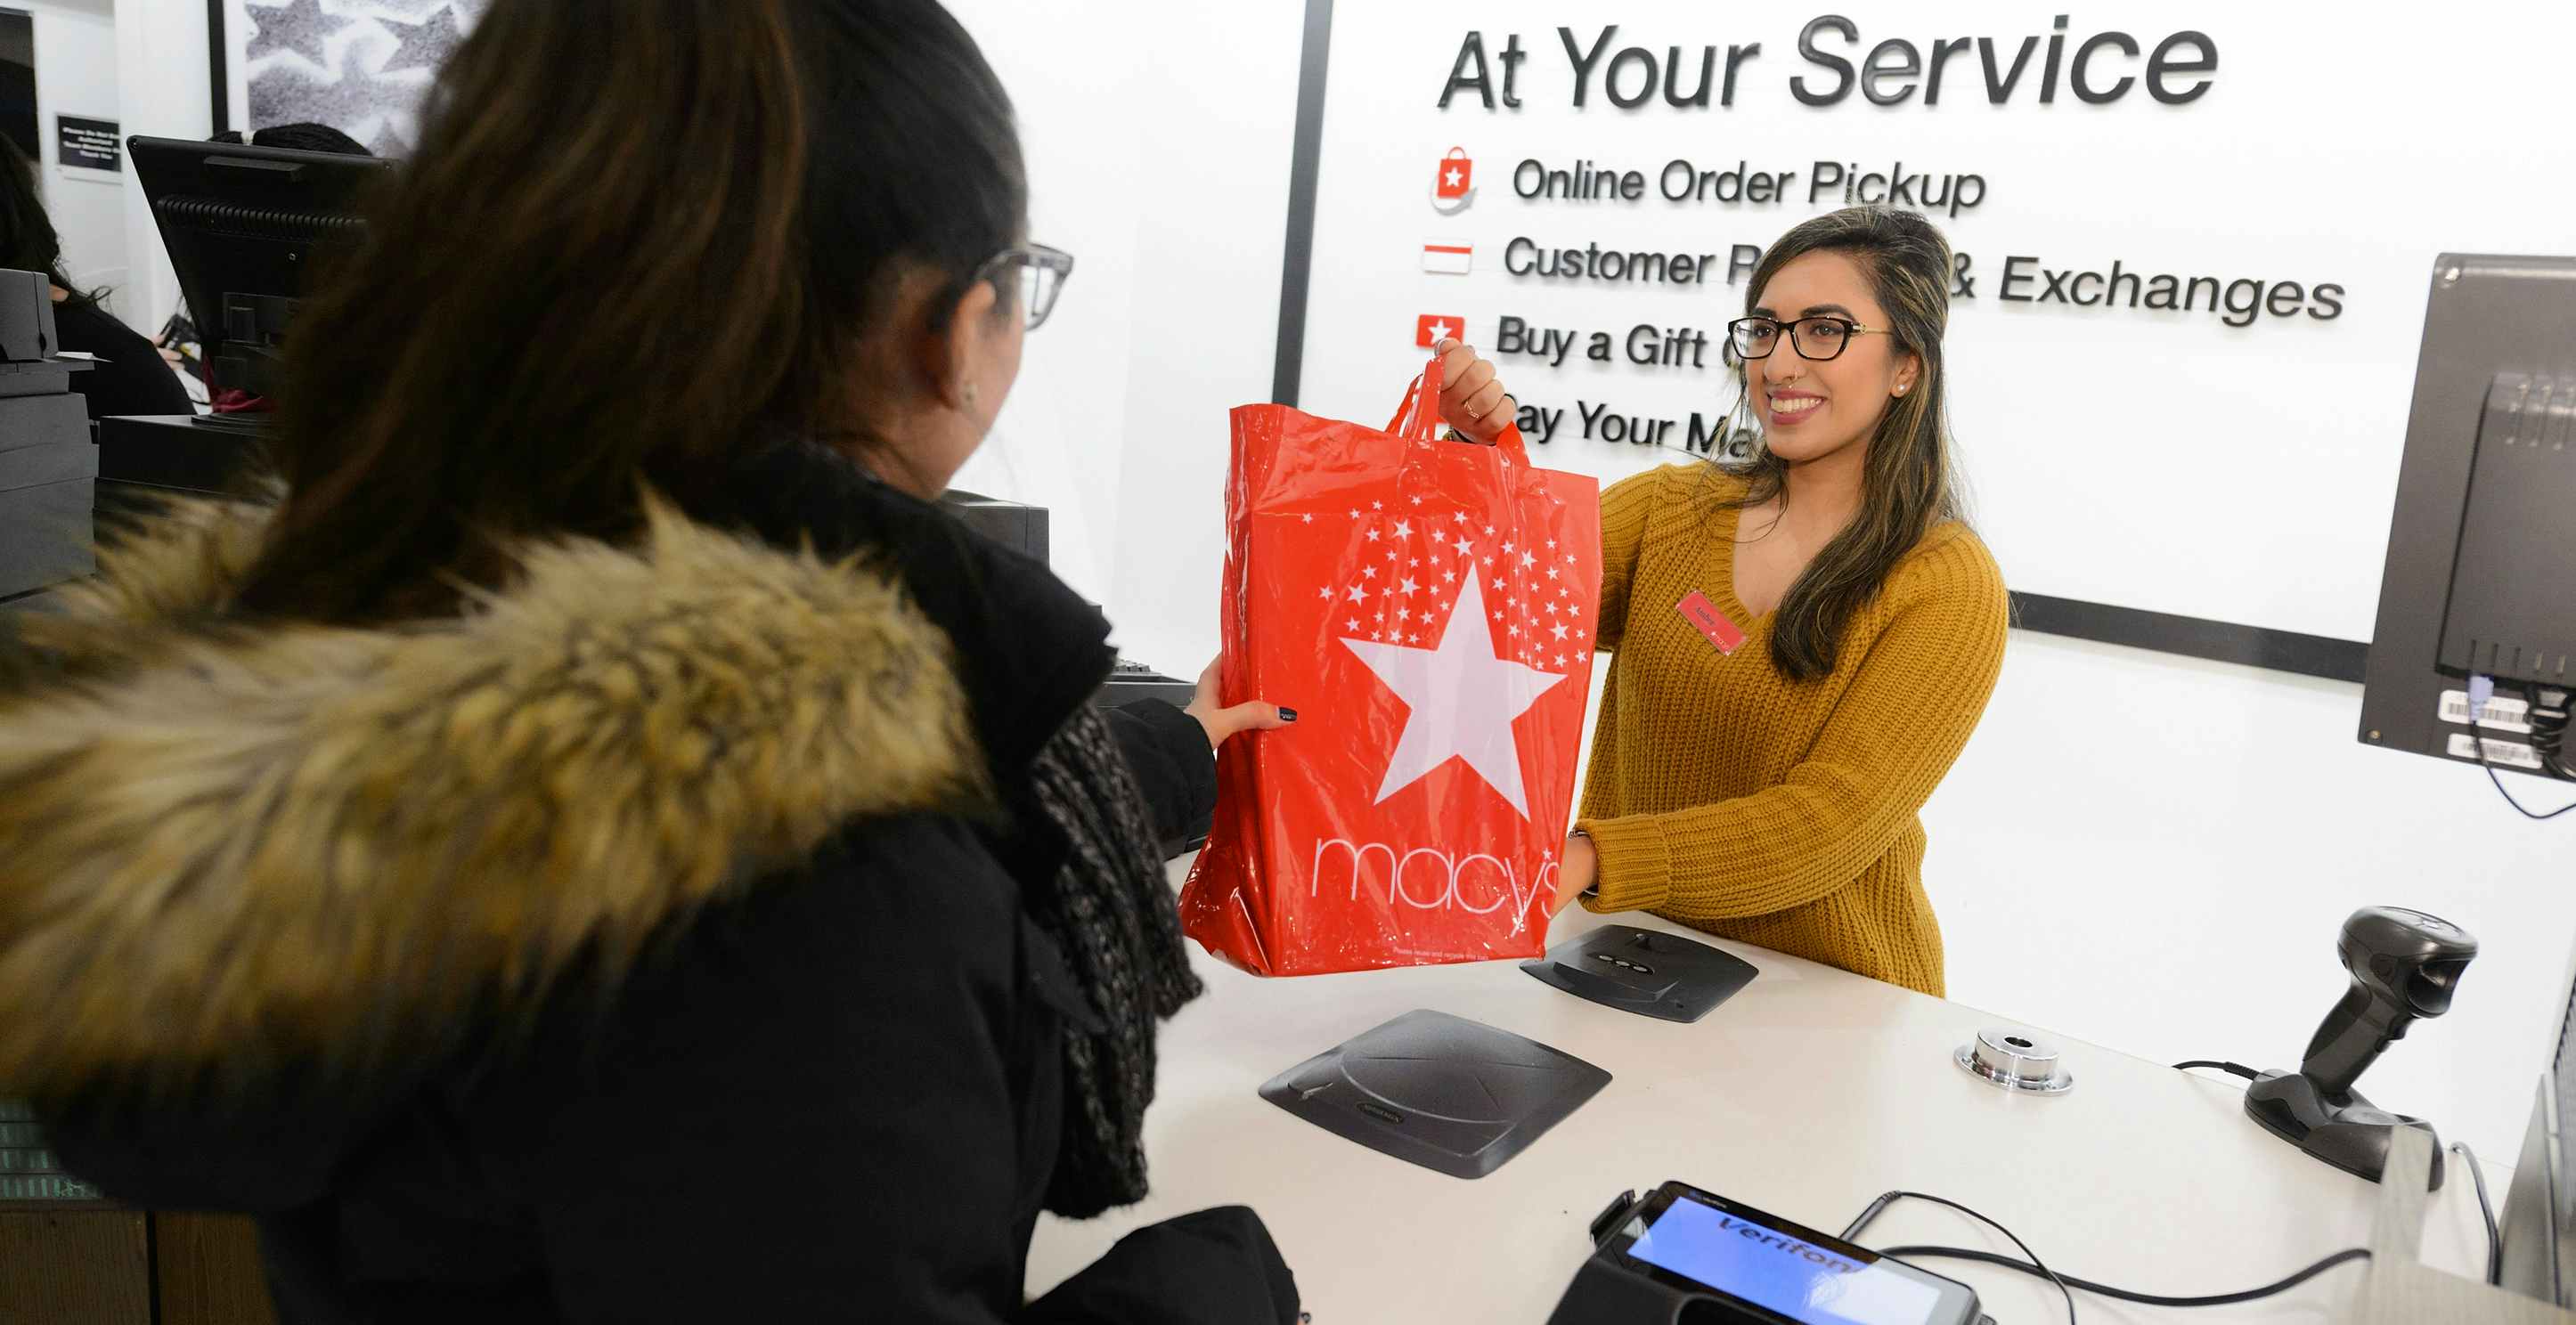 macys customer service cashier handing order pickup bag to customer